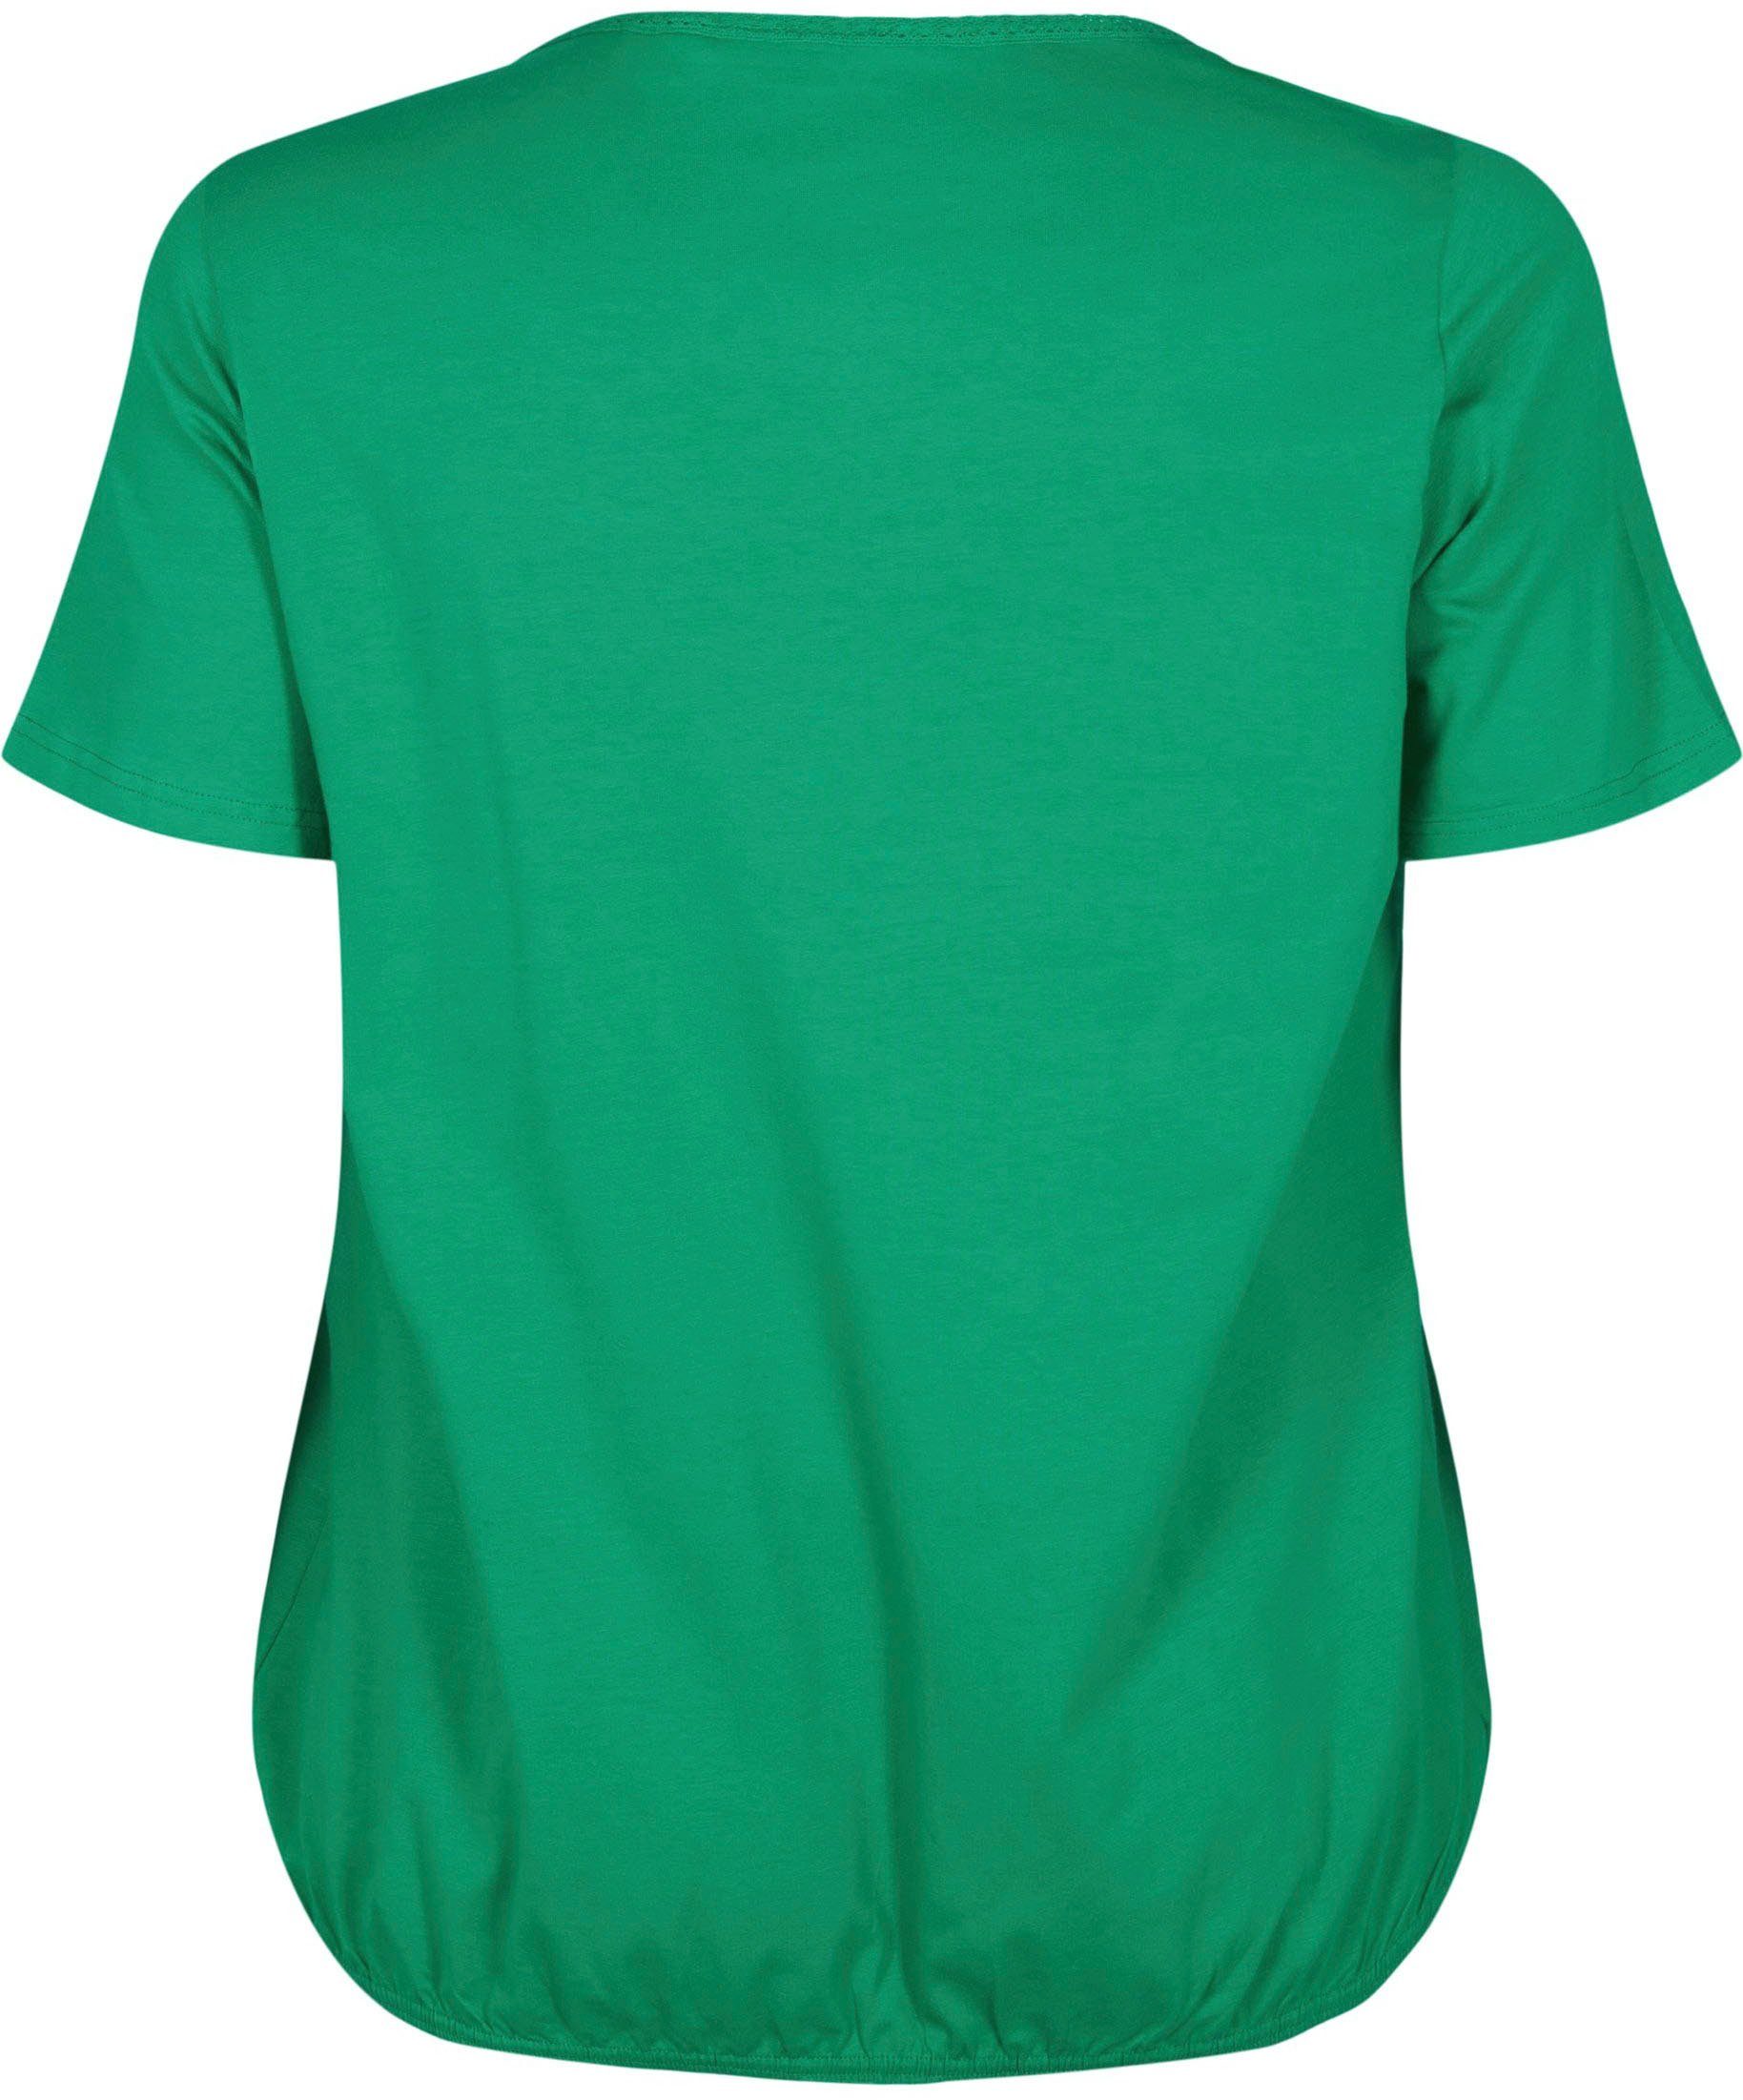 Zizzi T-Shirt Zizzi jolly VPOLLY green